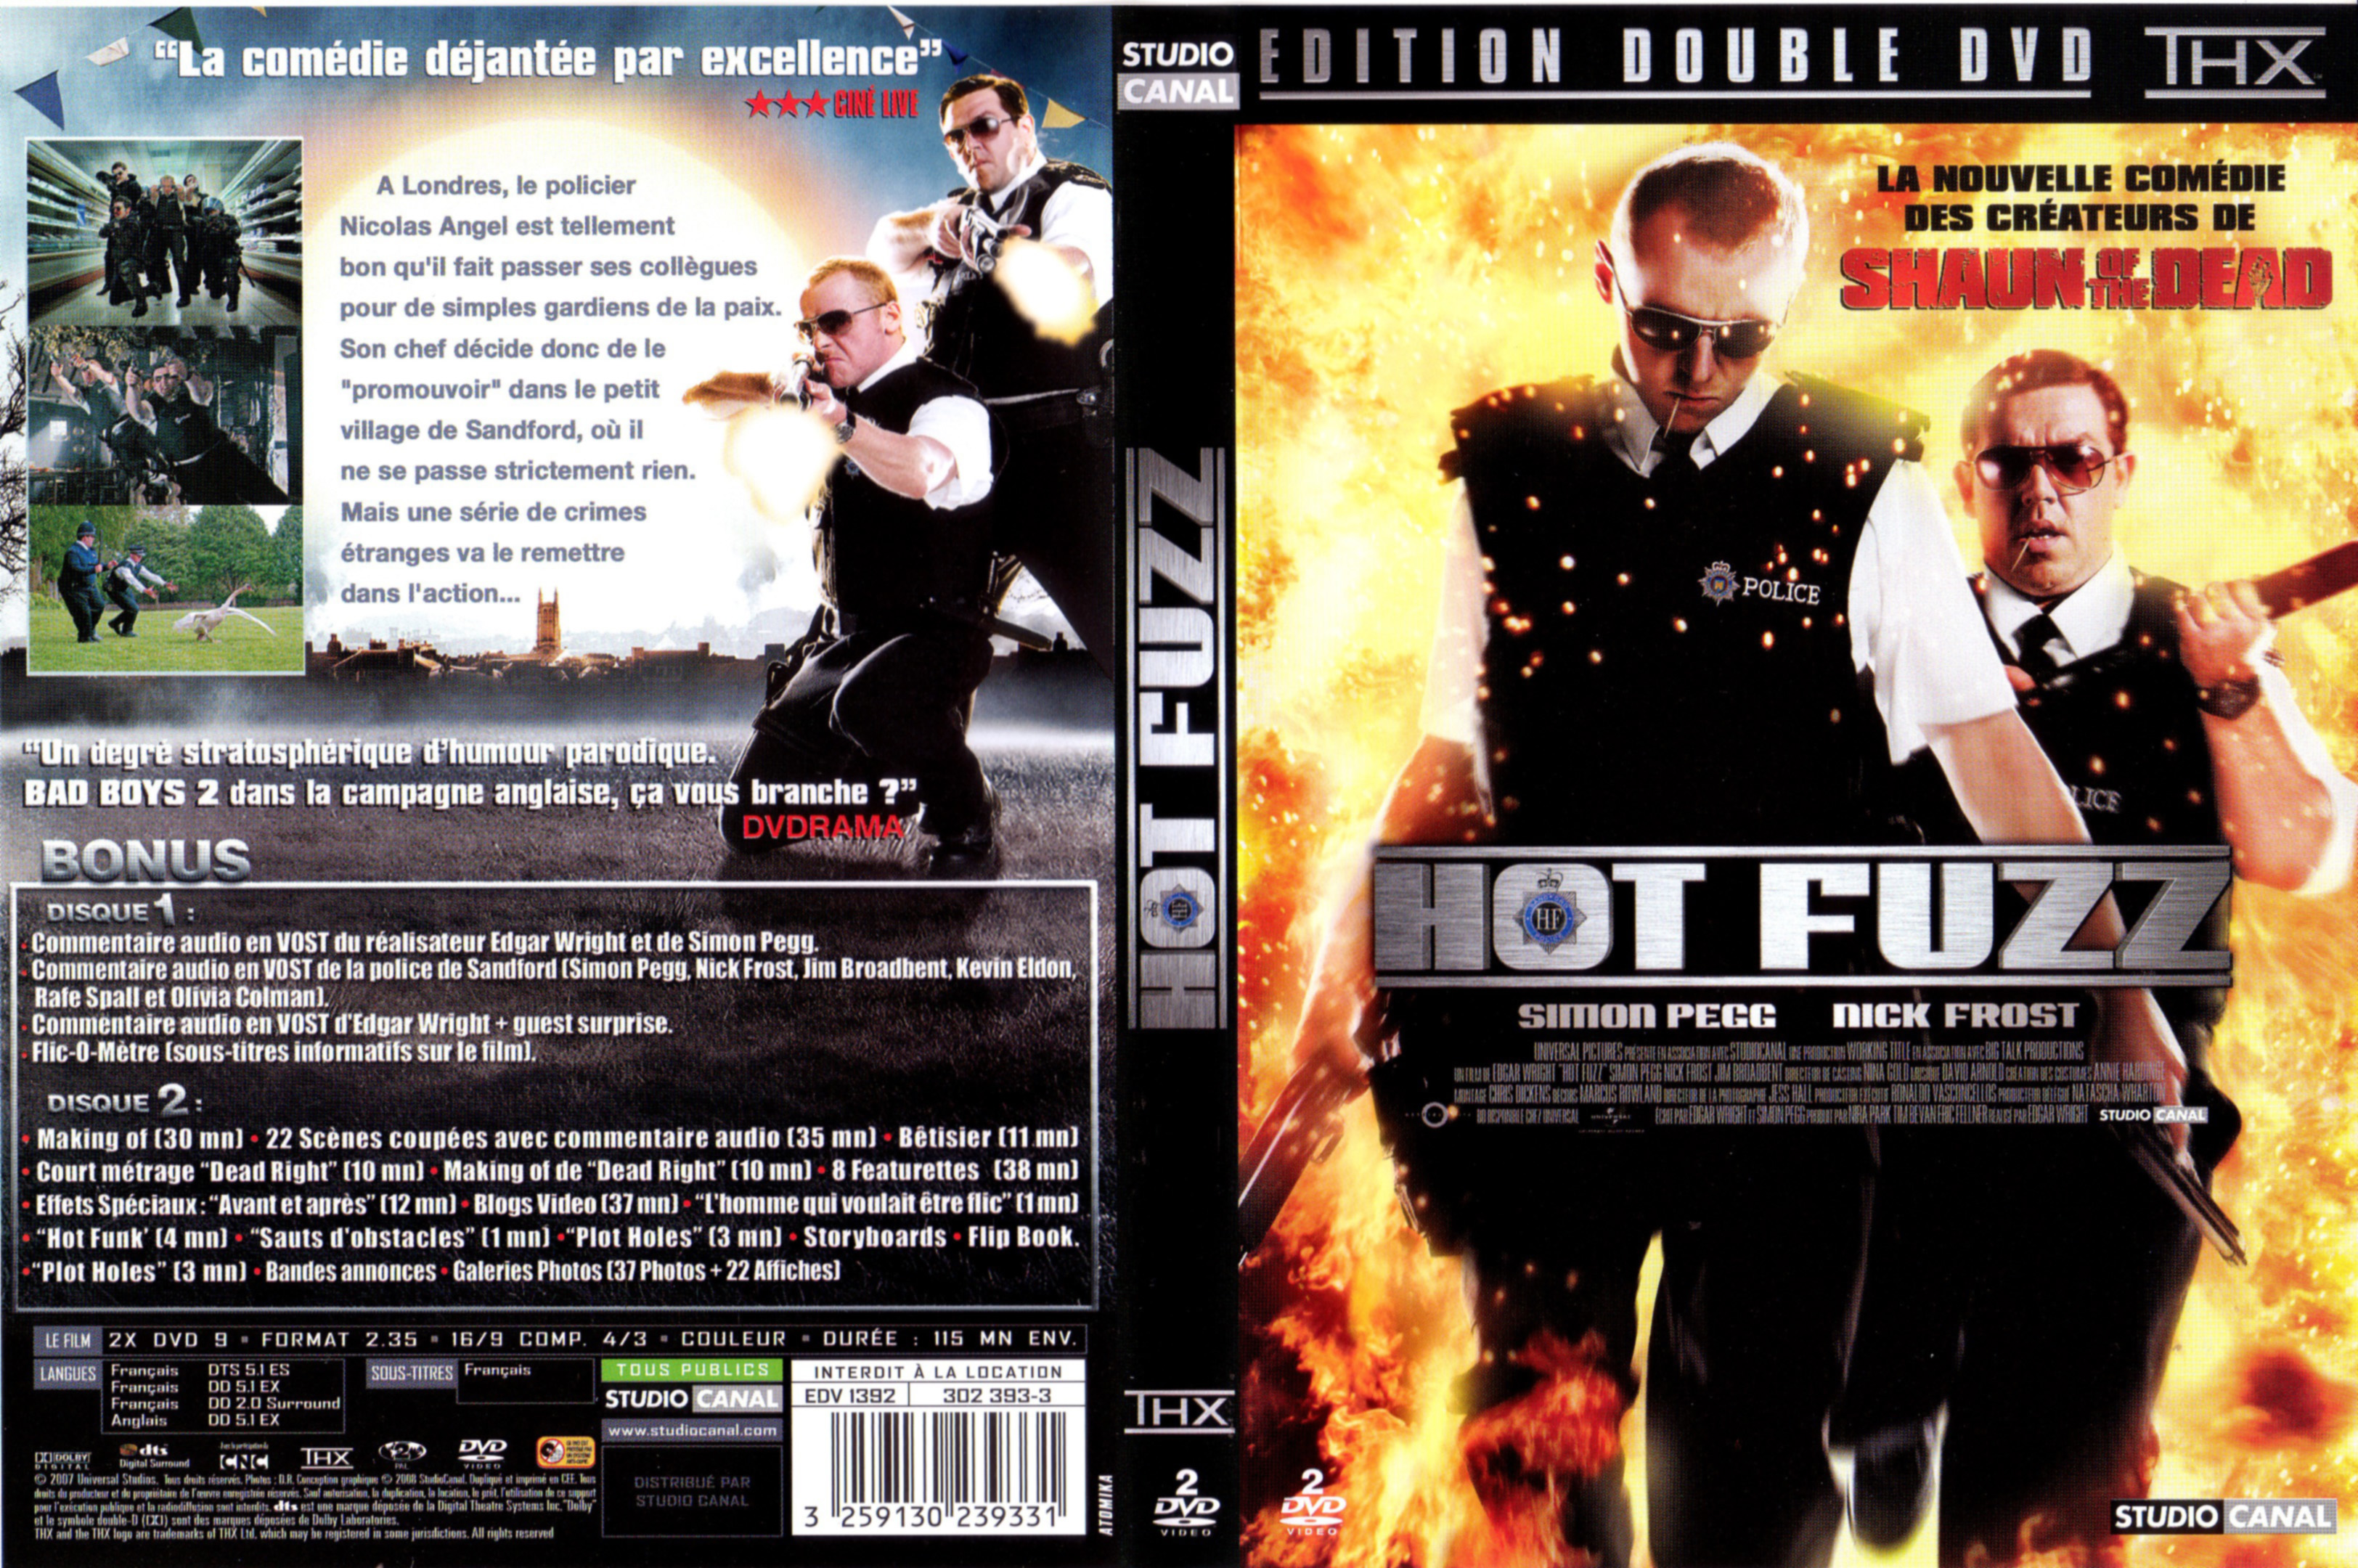 Jaquette DVD Hot fuzz v2